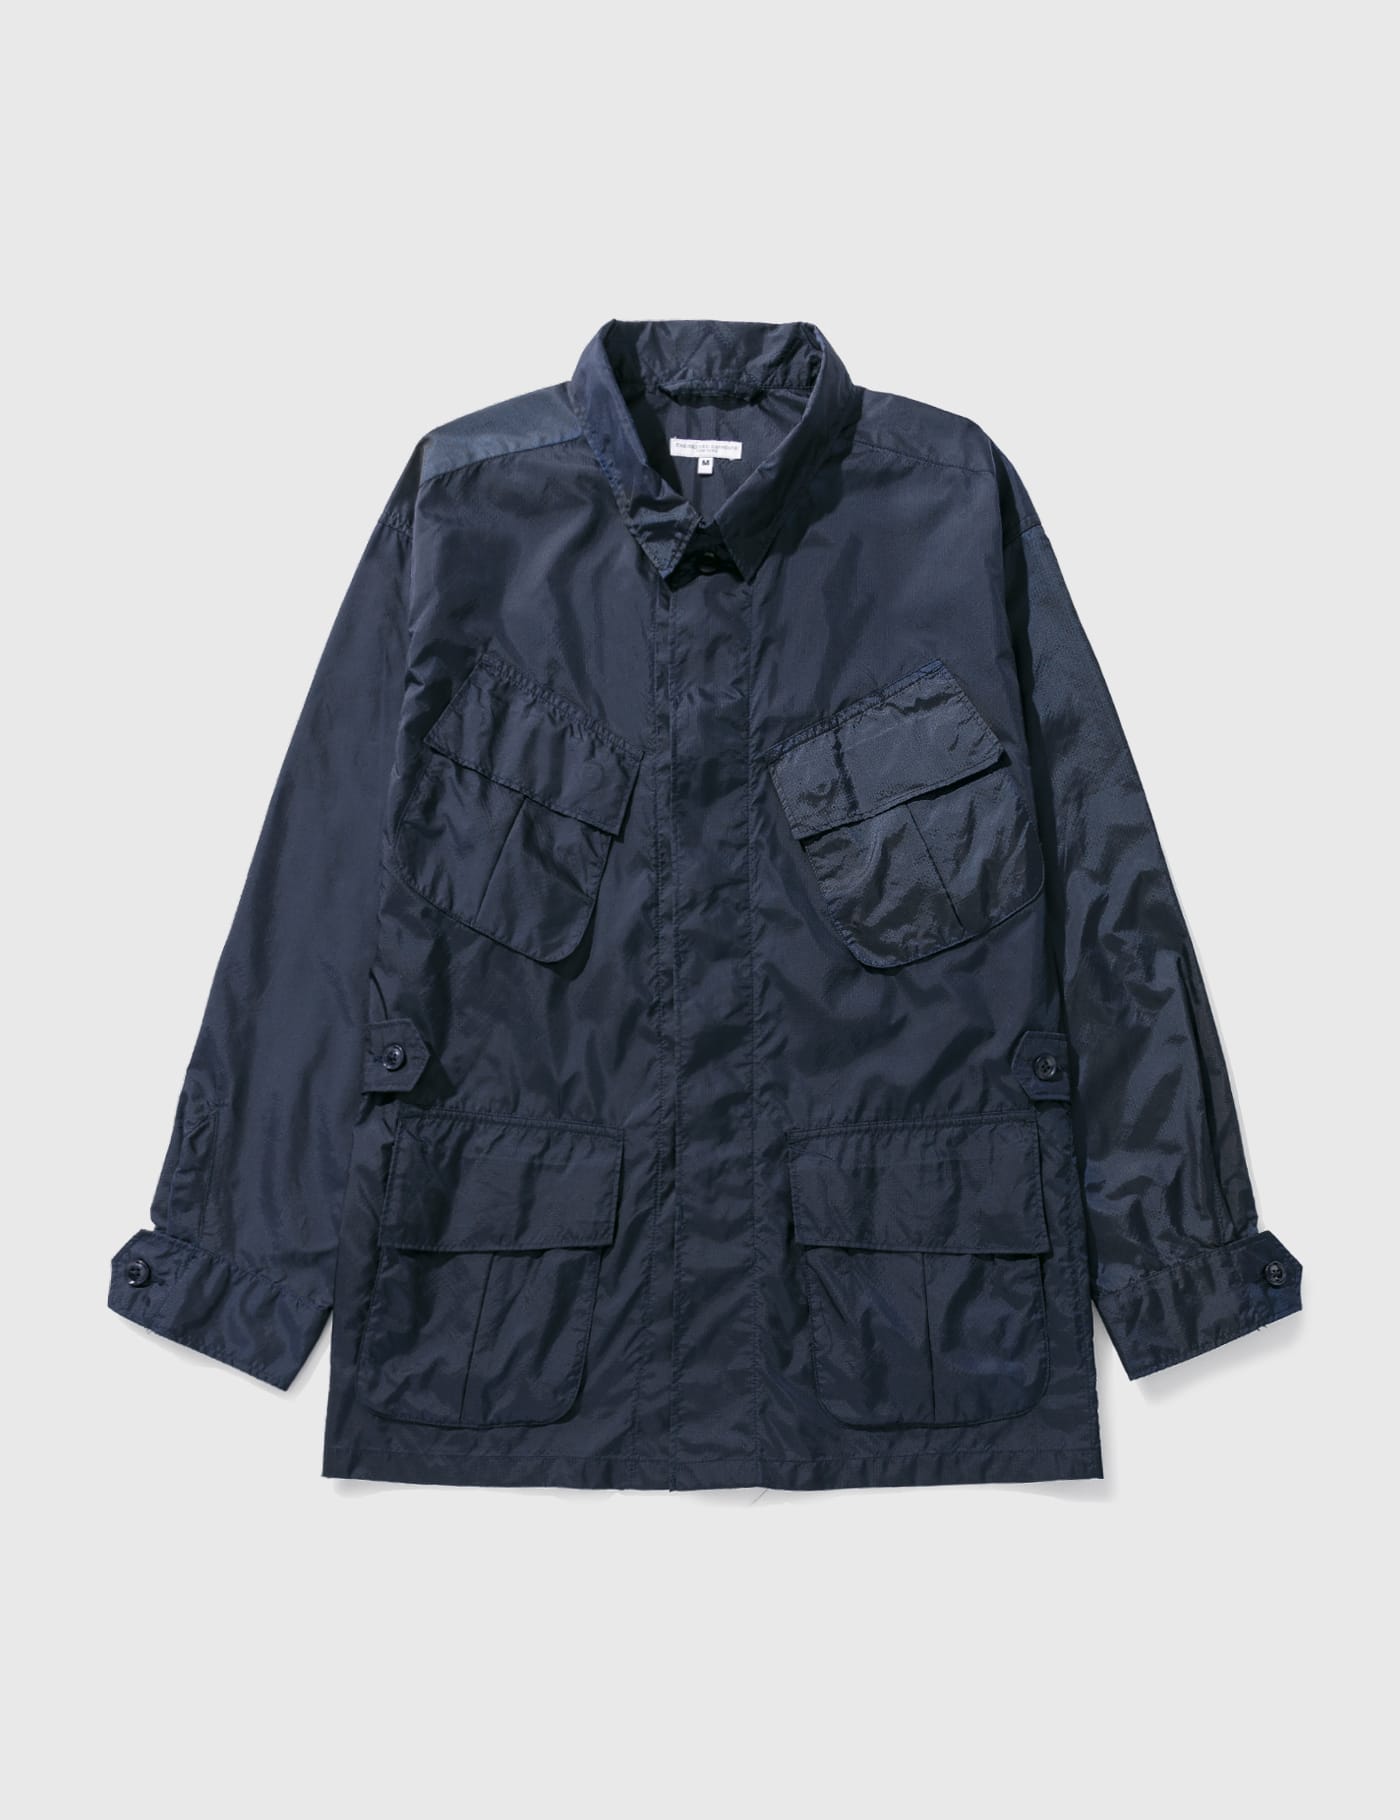 Engineered Garments - Jungle Fatigue Jacket | HBX - Globally